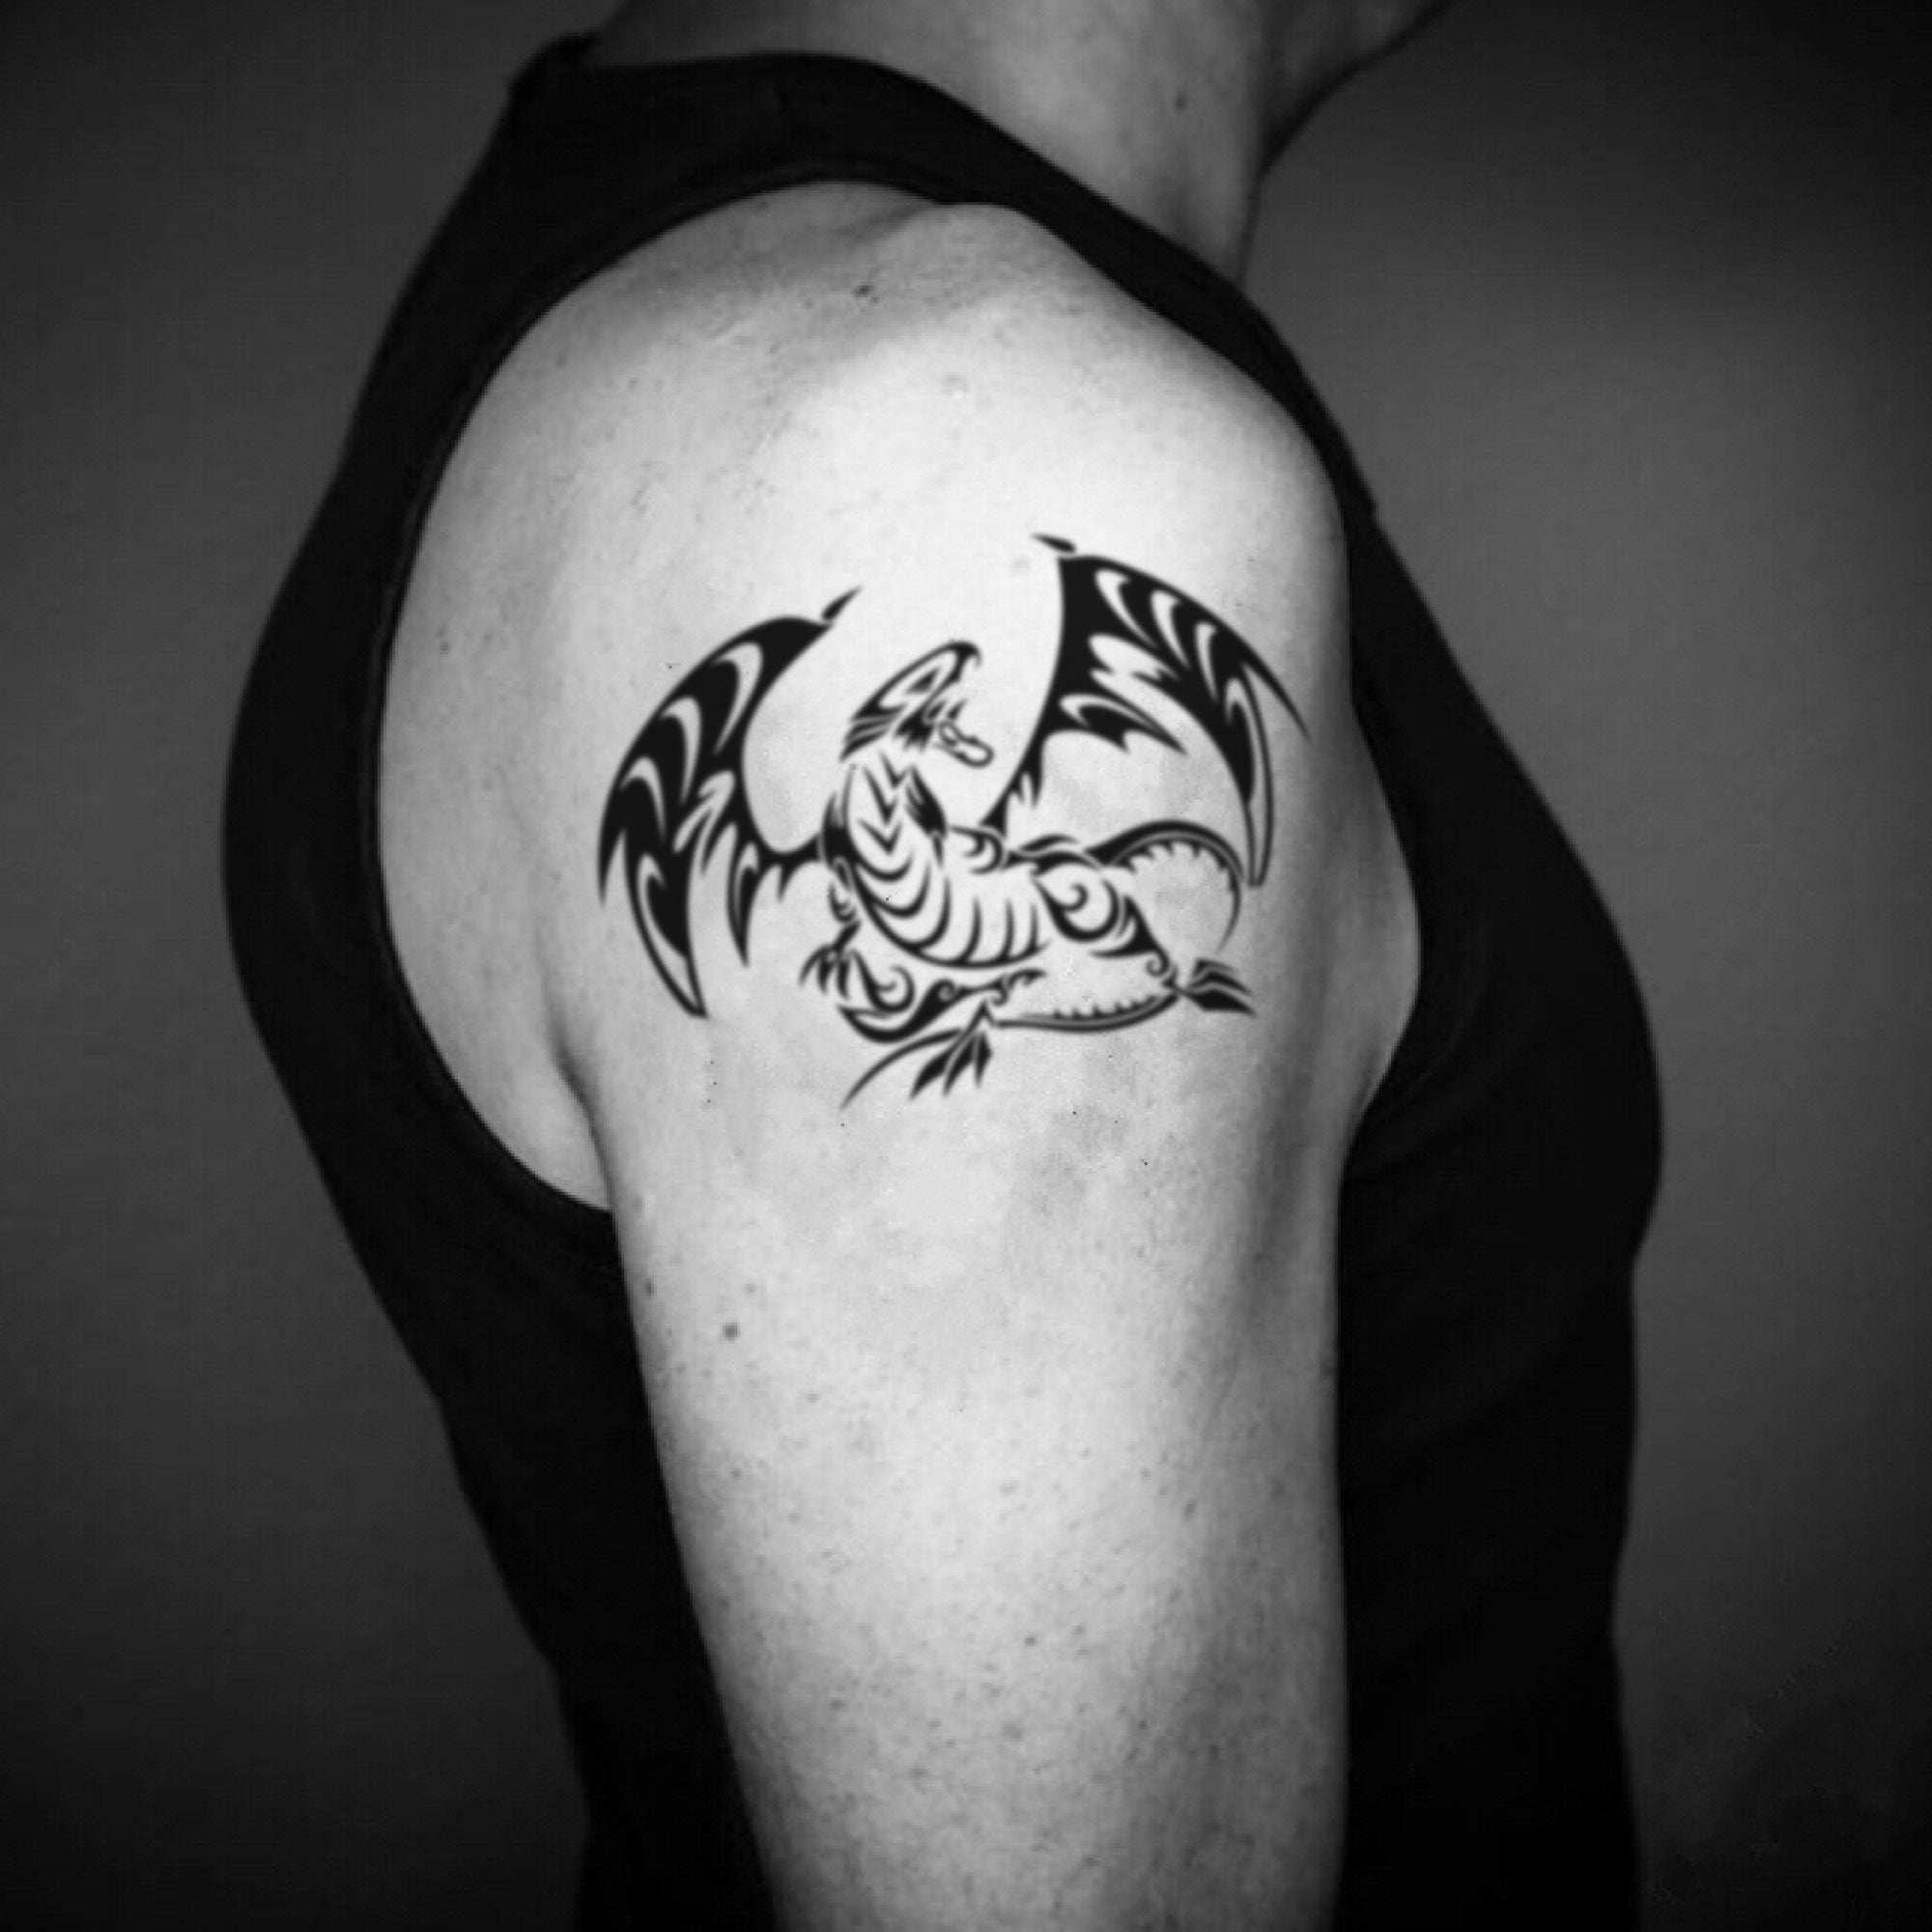 Haku Psychôse on Twitter Healed one Black dragon with red eyes toon  version  yugioh yugiohtattoo toondragon toondragontattoo tattoo ink  inked tattoo httpstcoETSVTv2SO3  Twitter